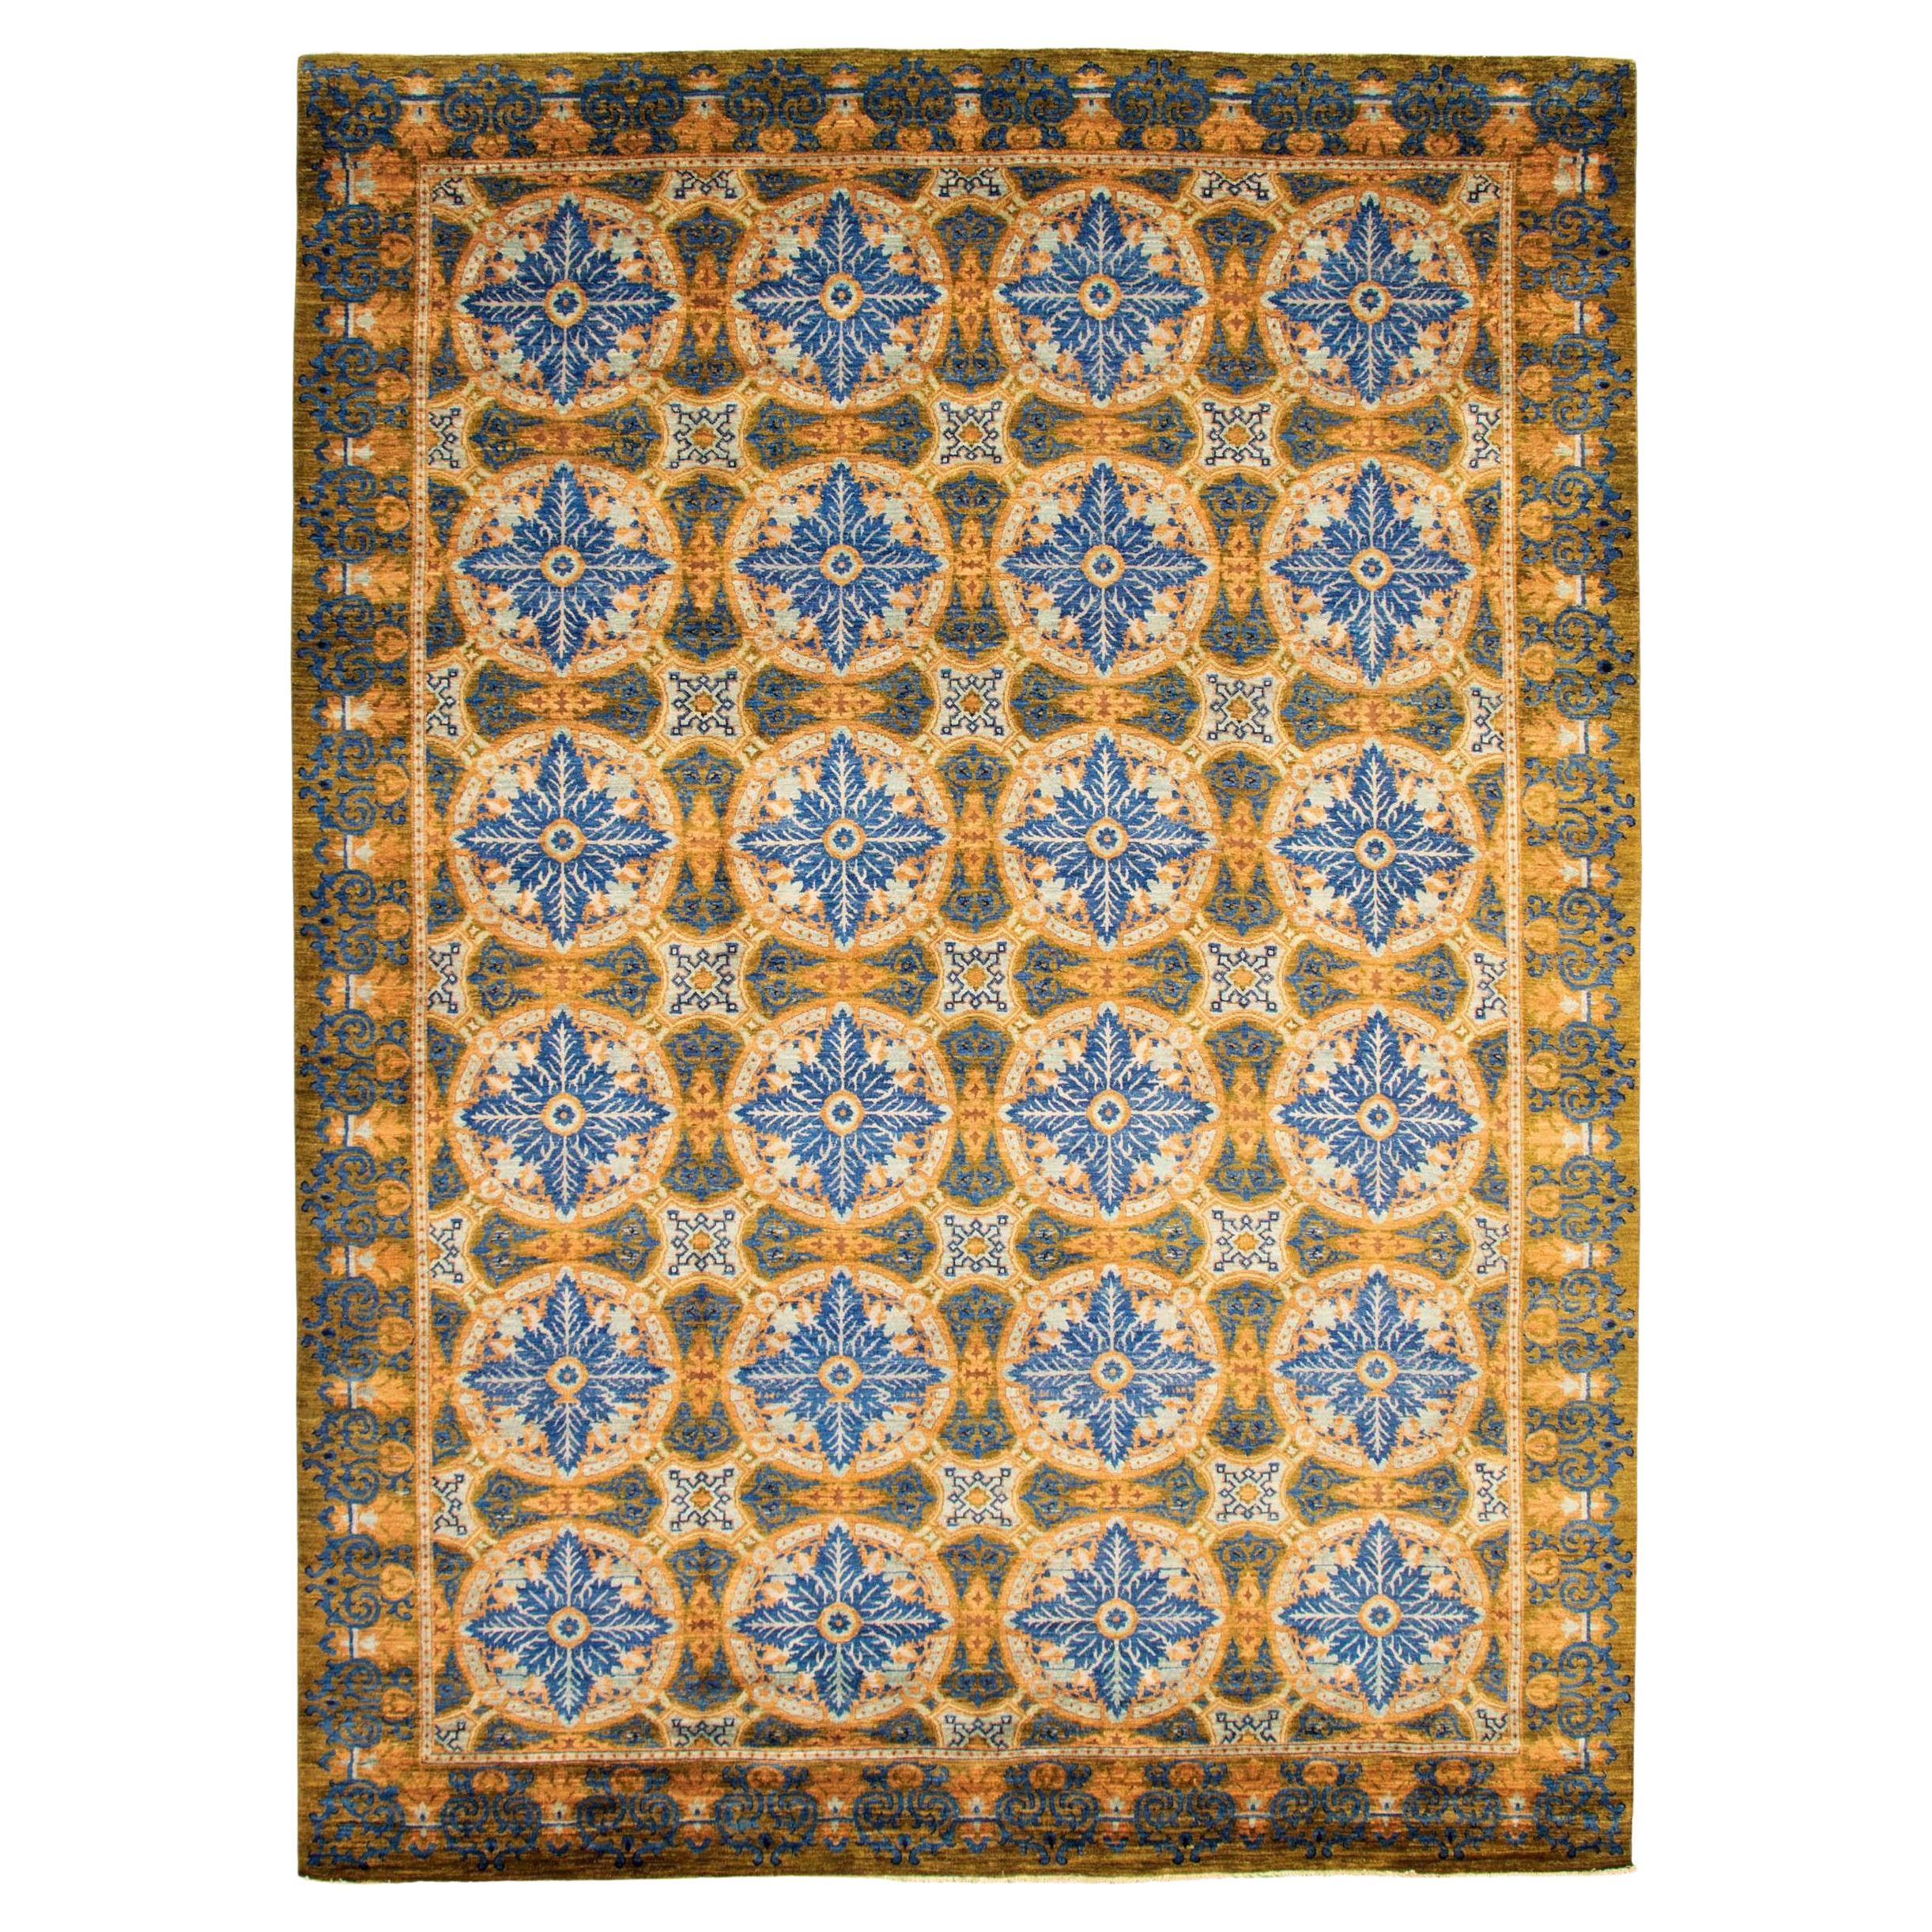 Geometric and Transitional Garden Carpet, Indigo, and Gold, 9' x 12'